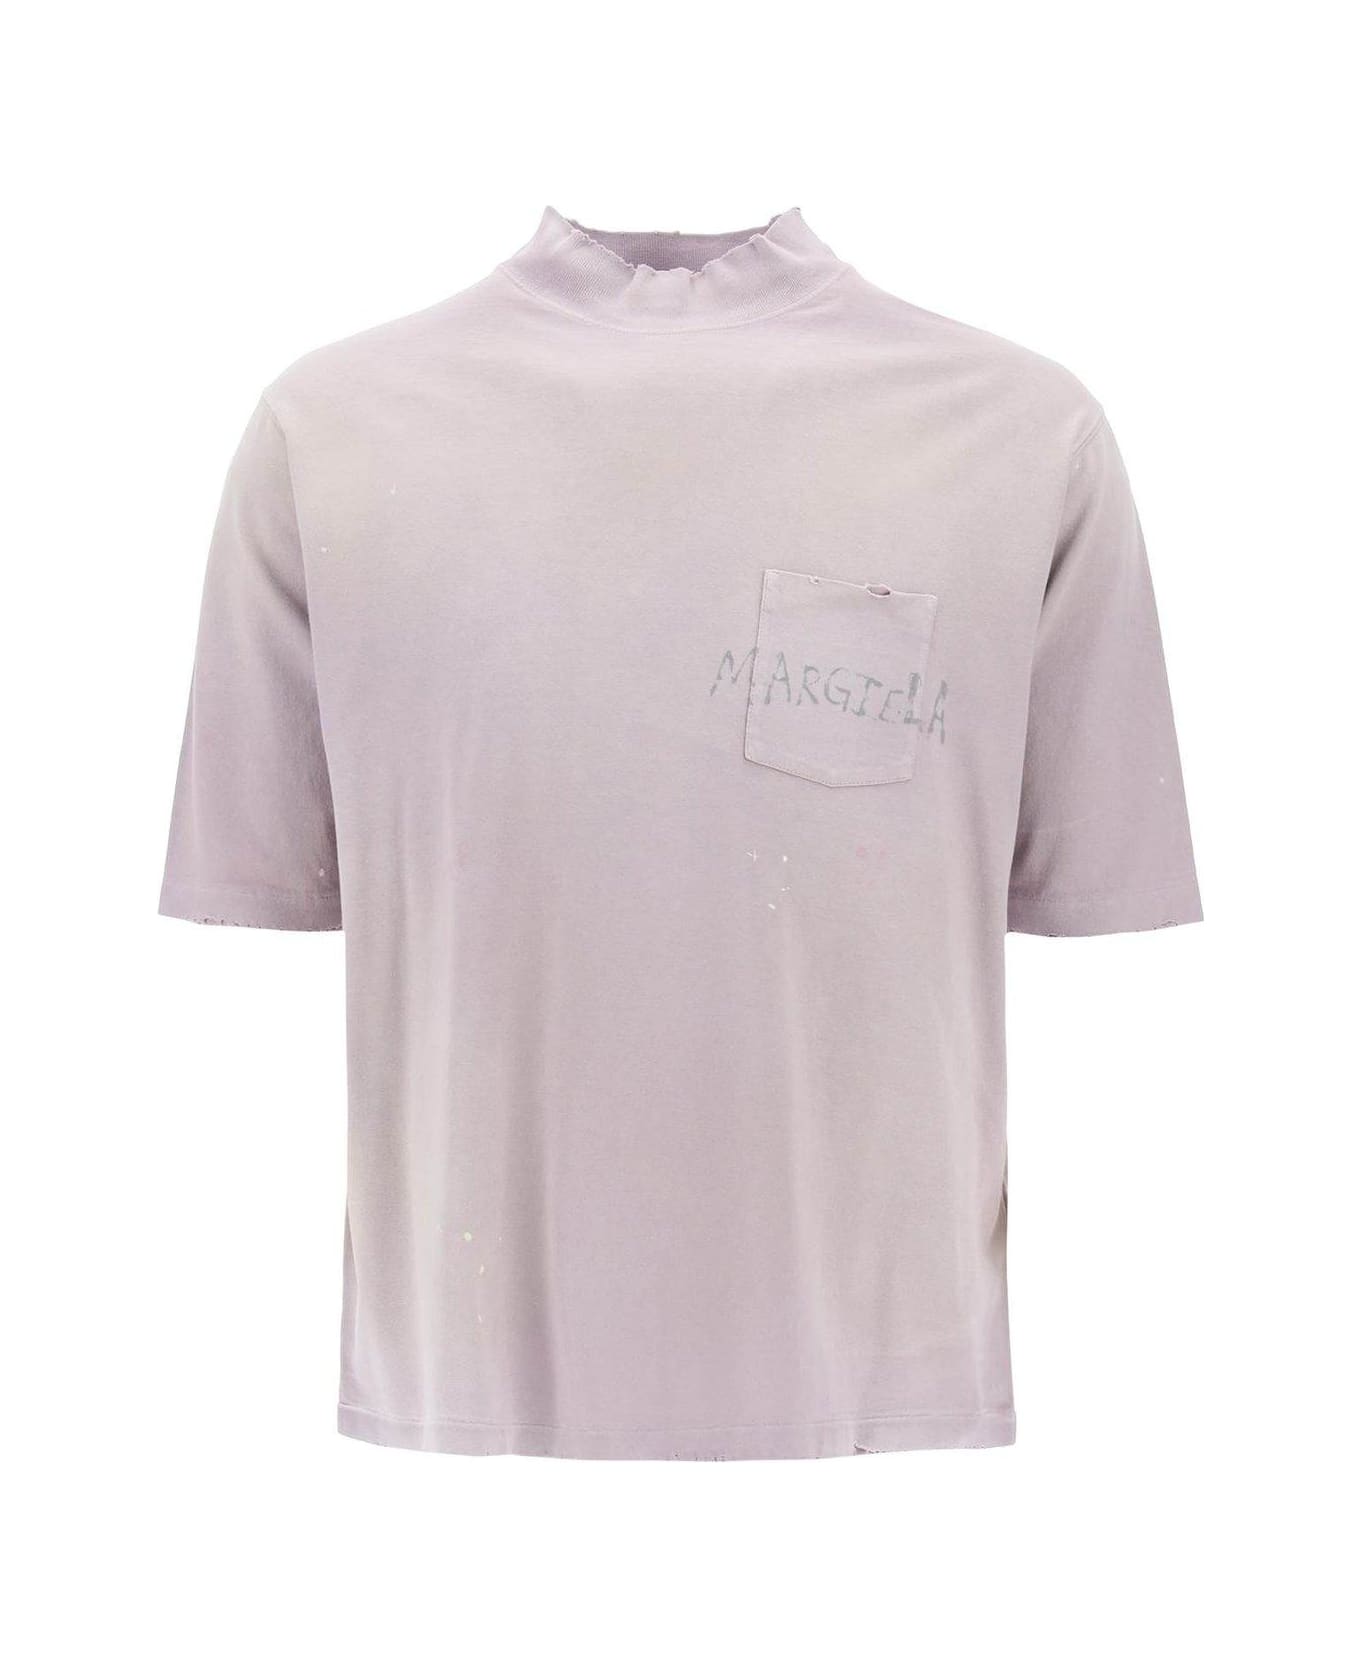 Maison Margiela Logo Printed High-neck T-shirt - PURPLE/WHITE